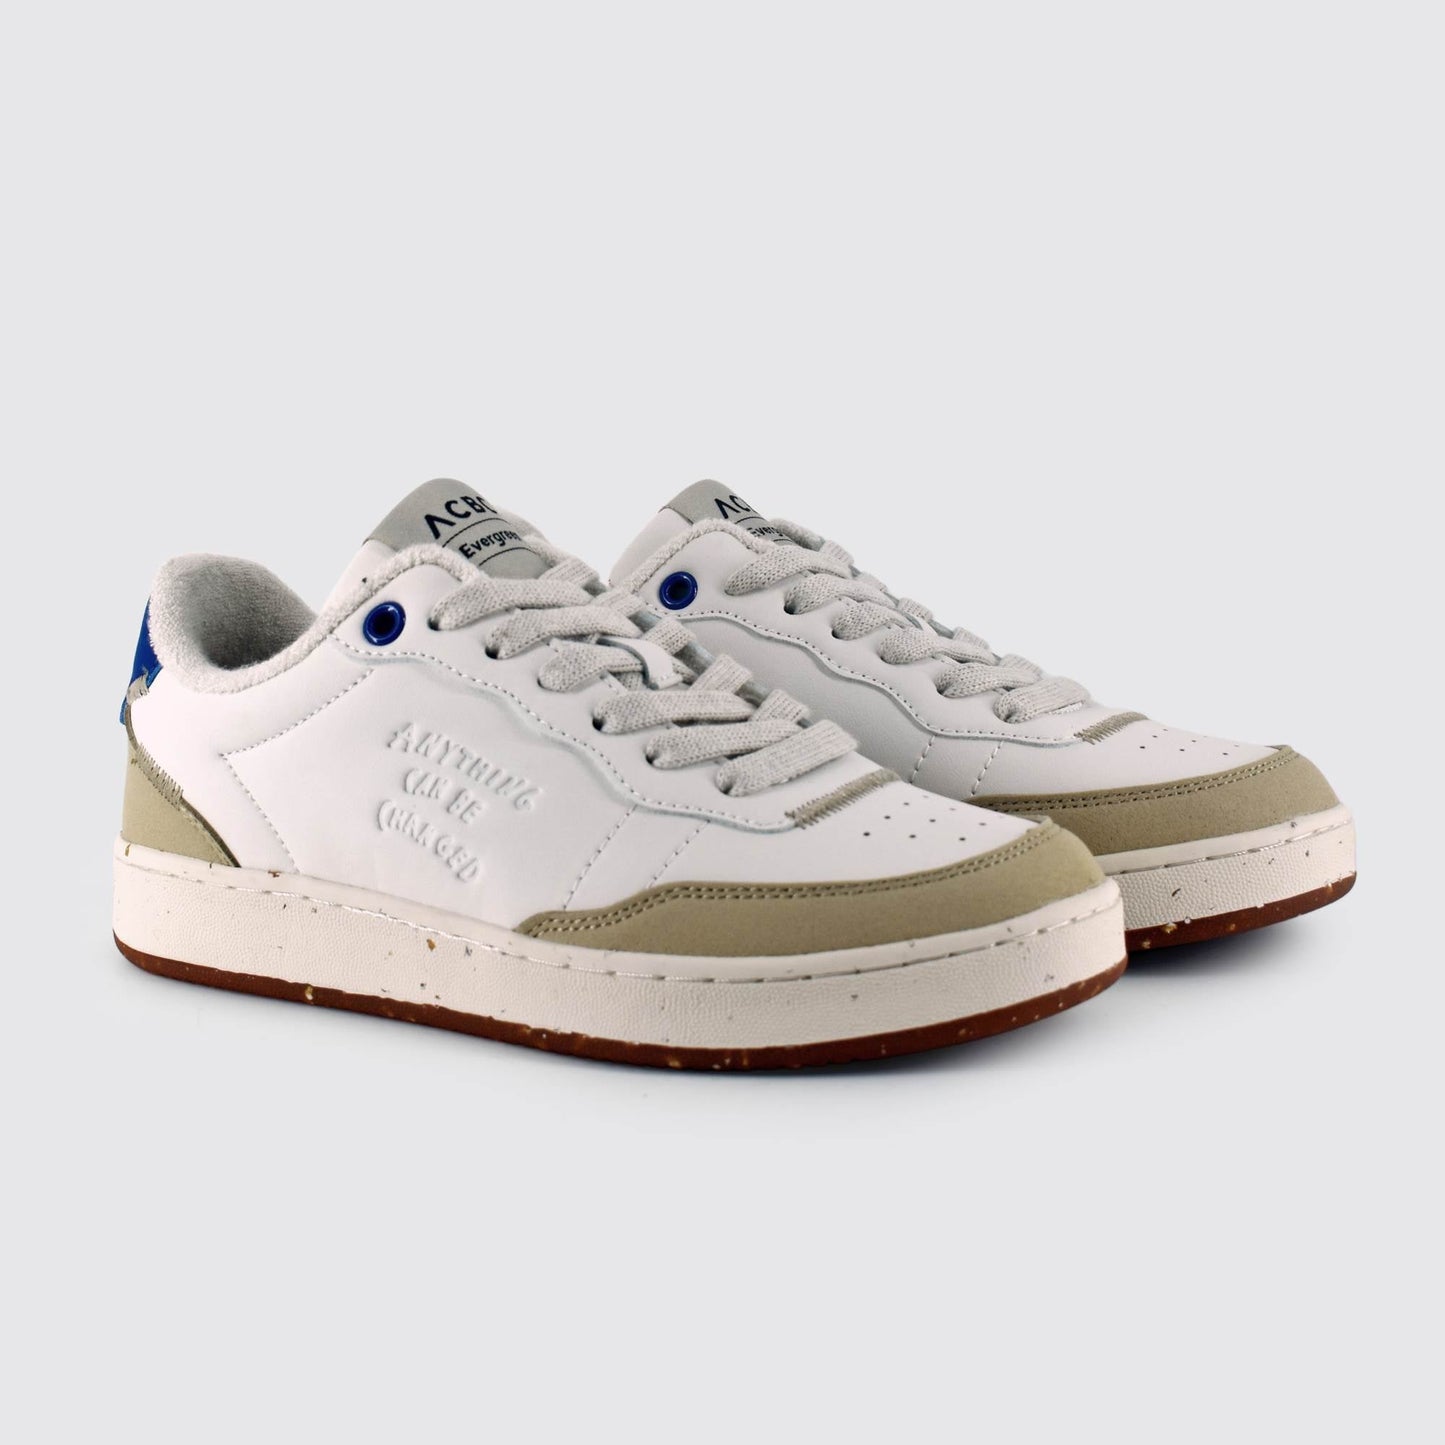 New - Evergreen Retro White Blue Shoes